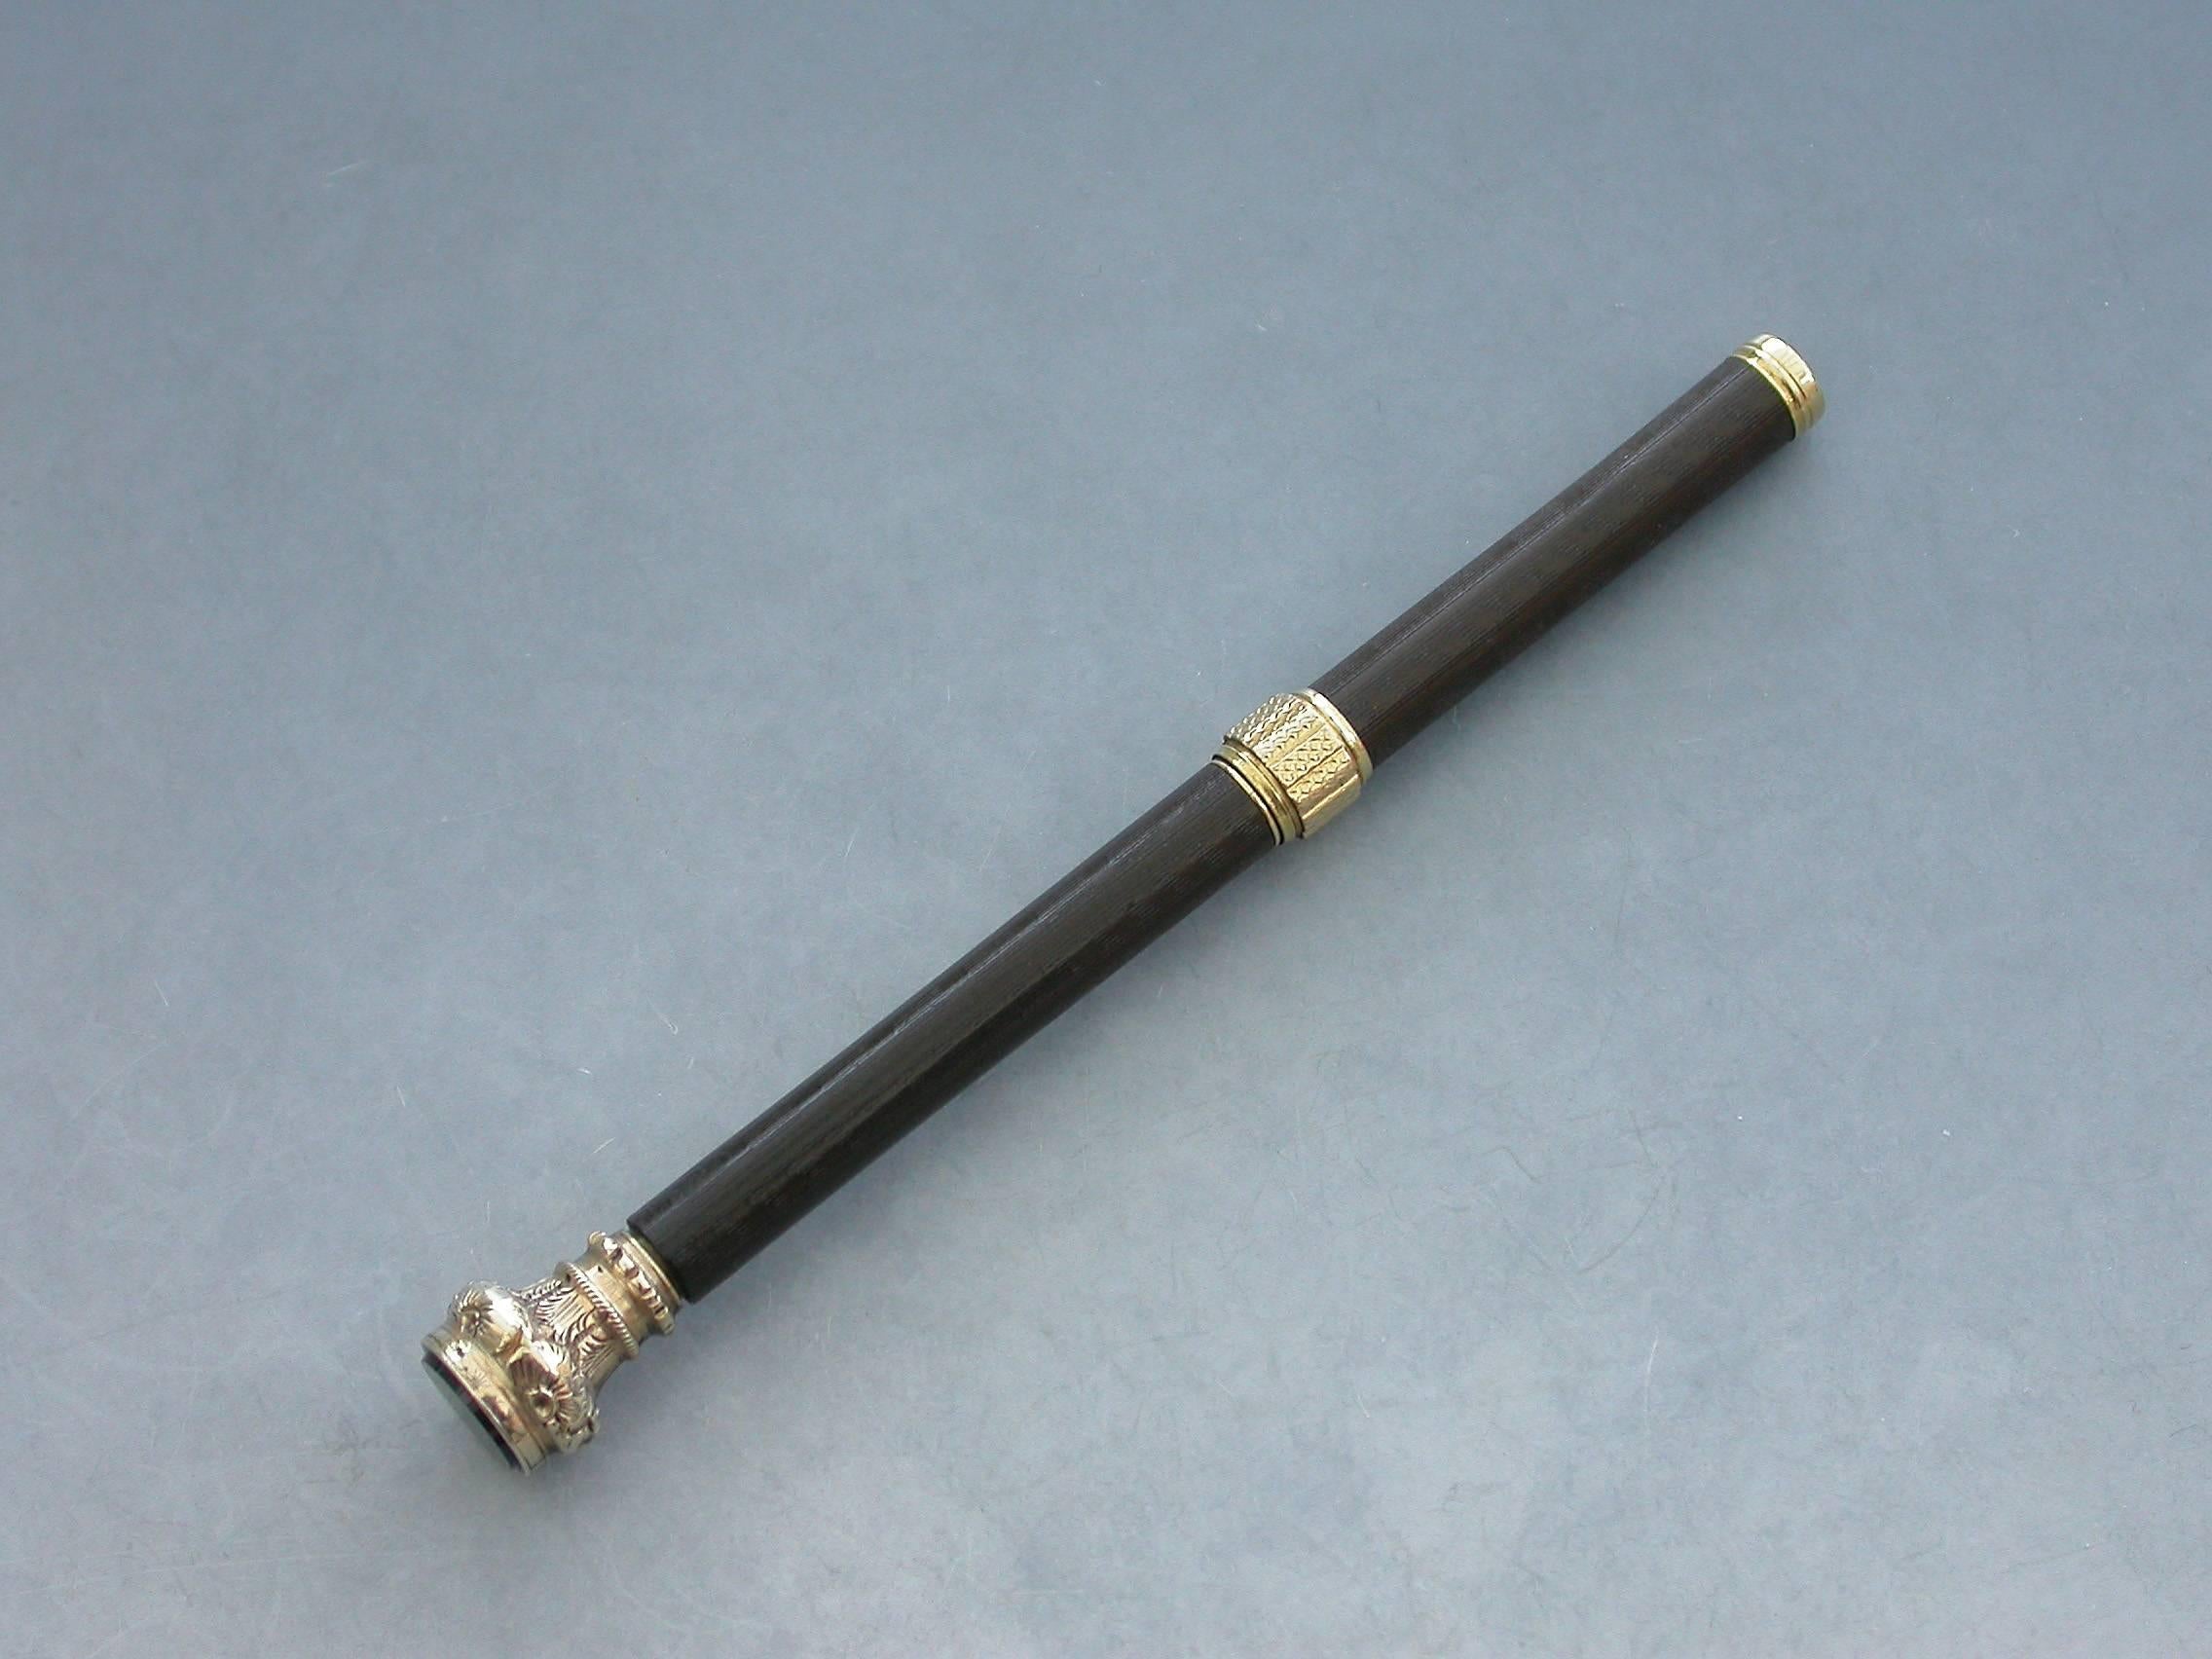 19th century fountain pen